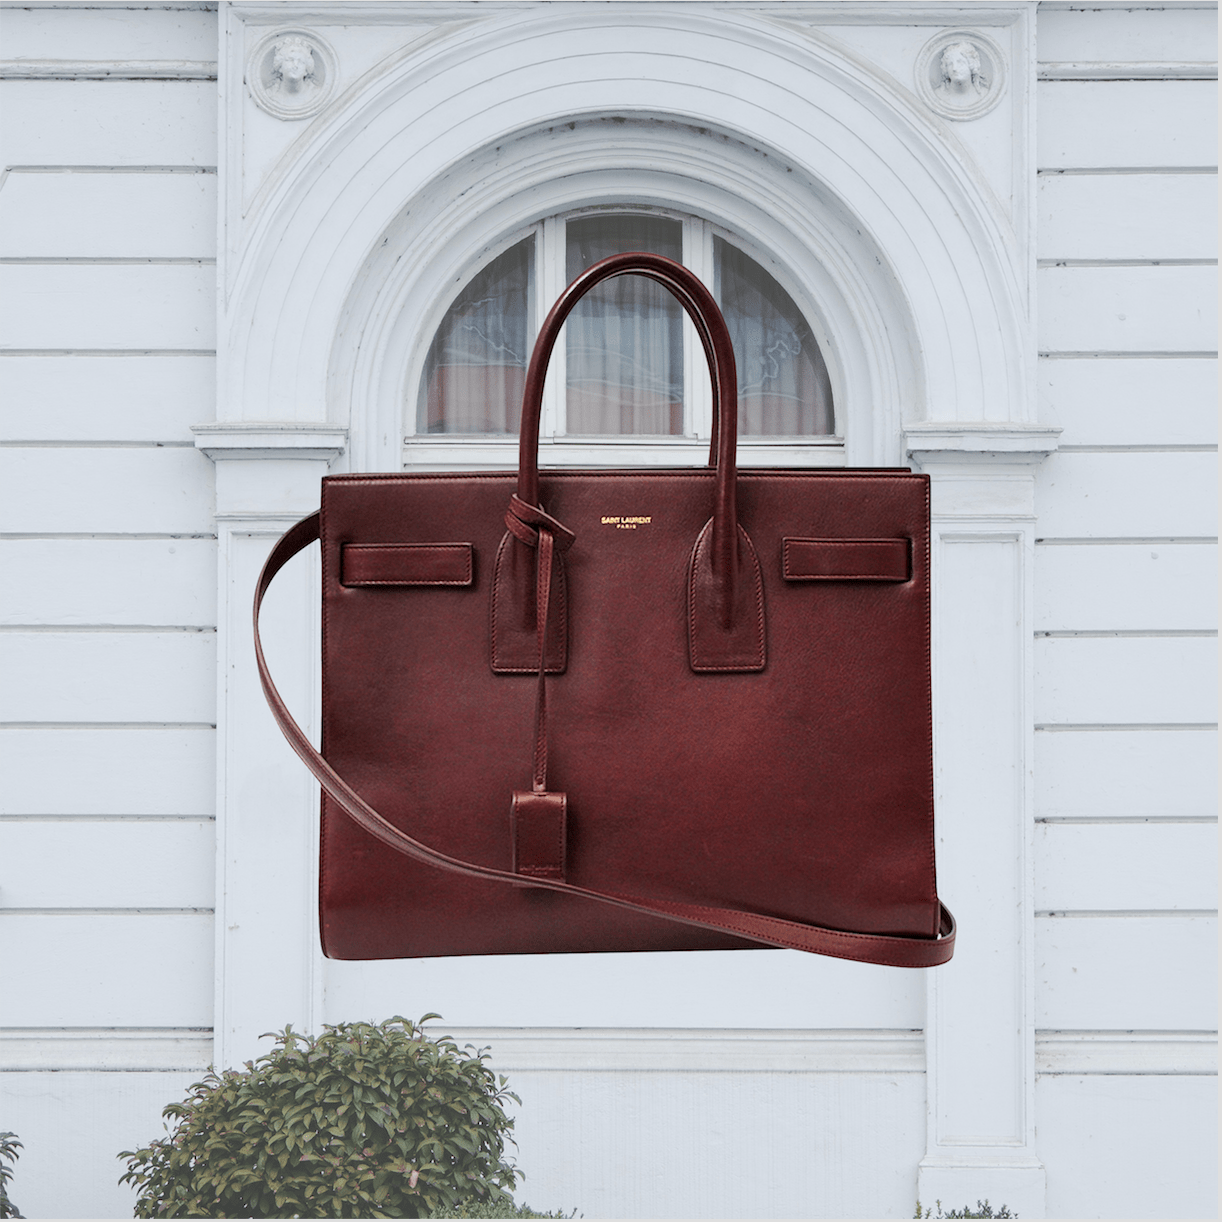 Replying to @kkaiser615 #greenscreen Designer Luxury Handbags to Avoid